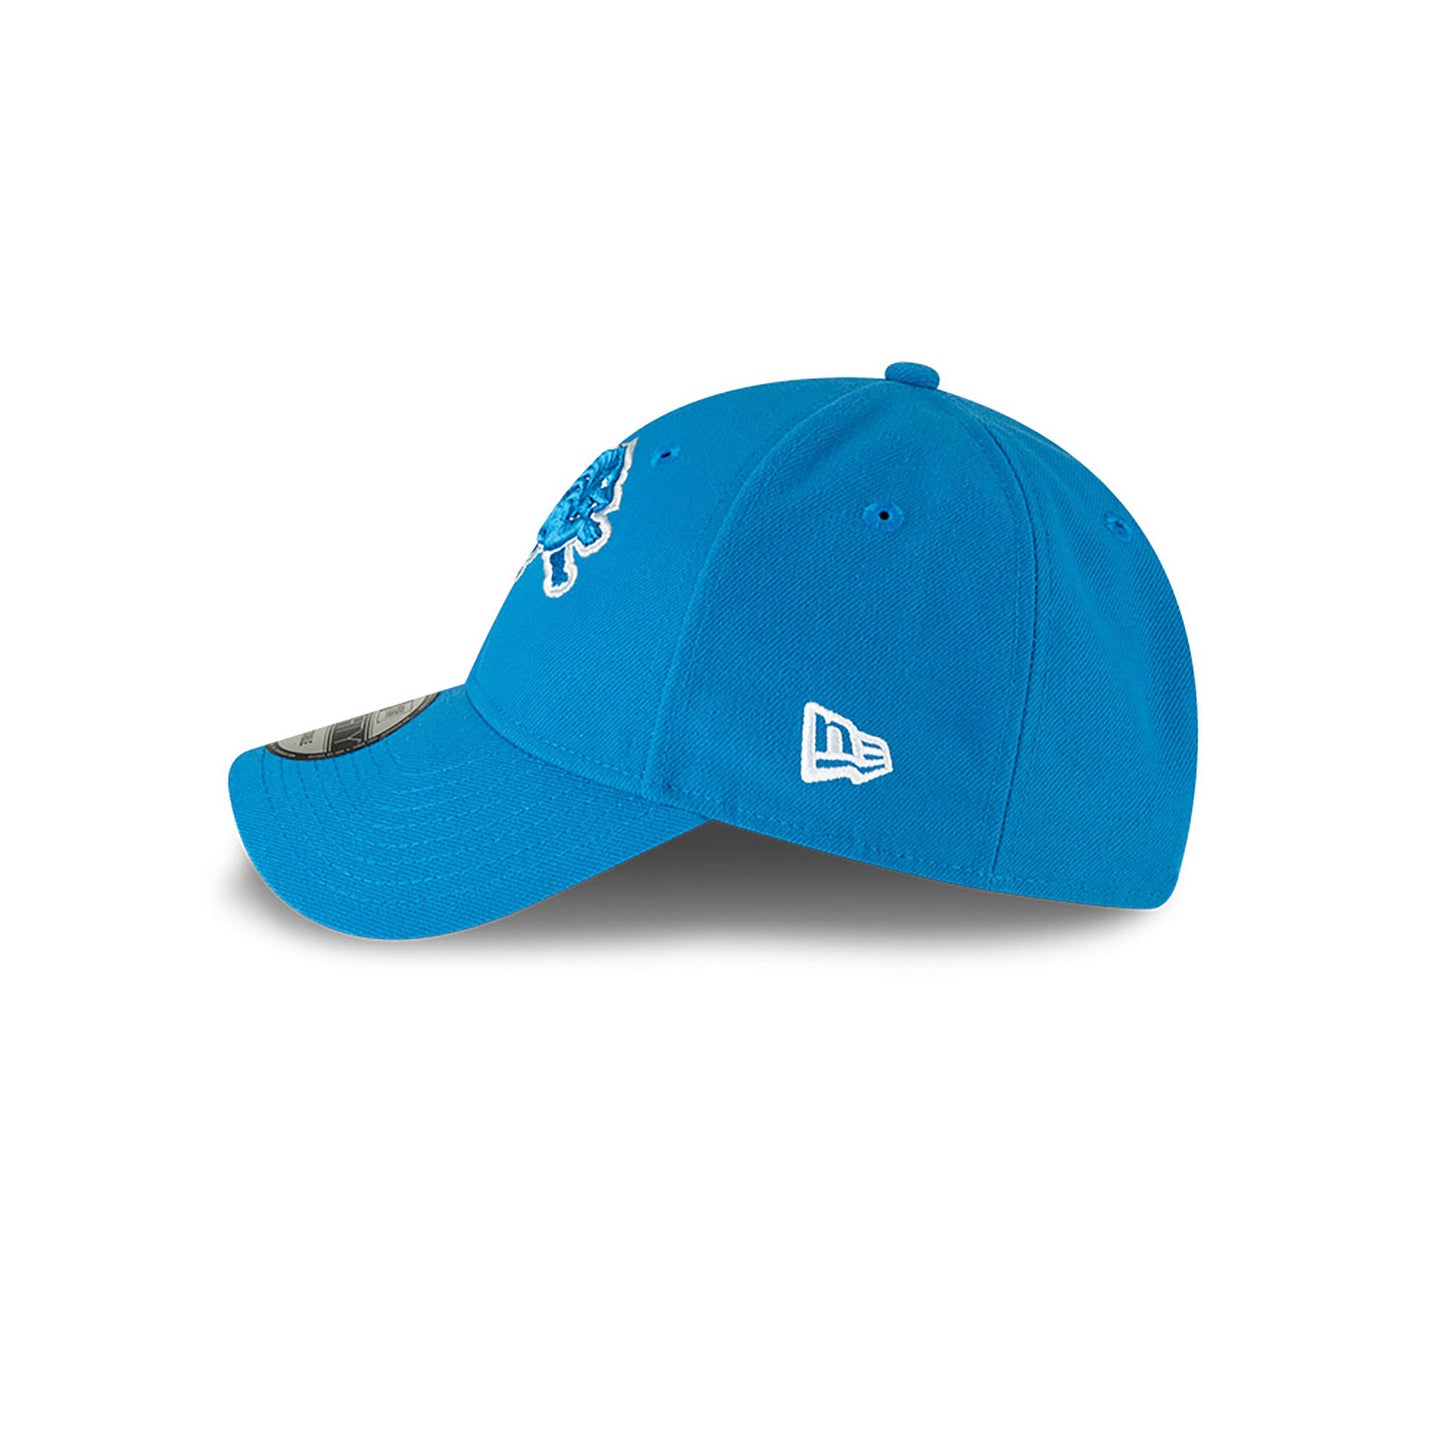 The League 9Forty cap